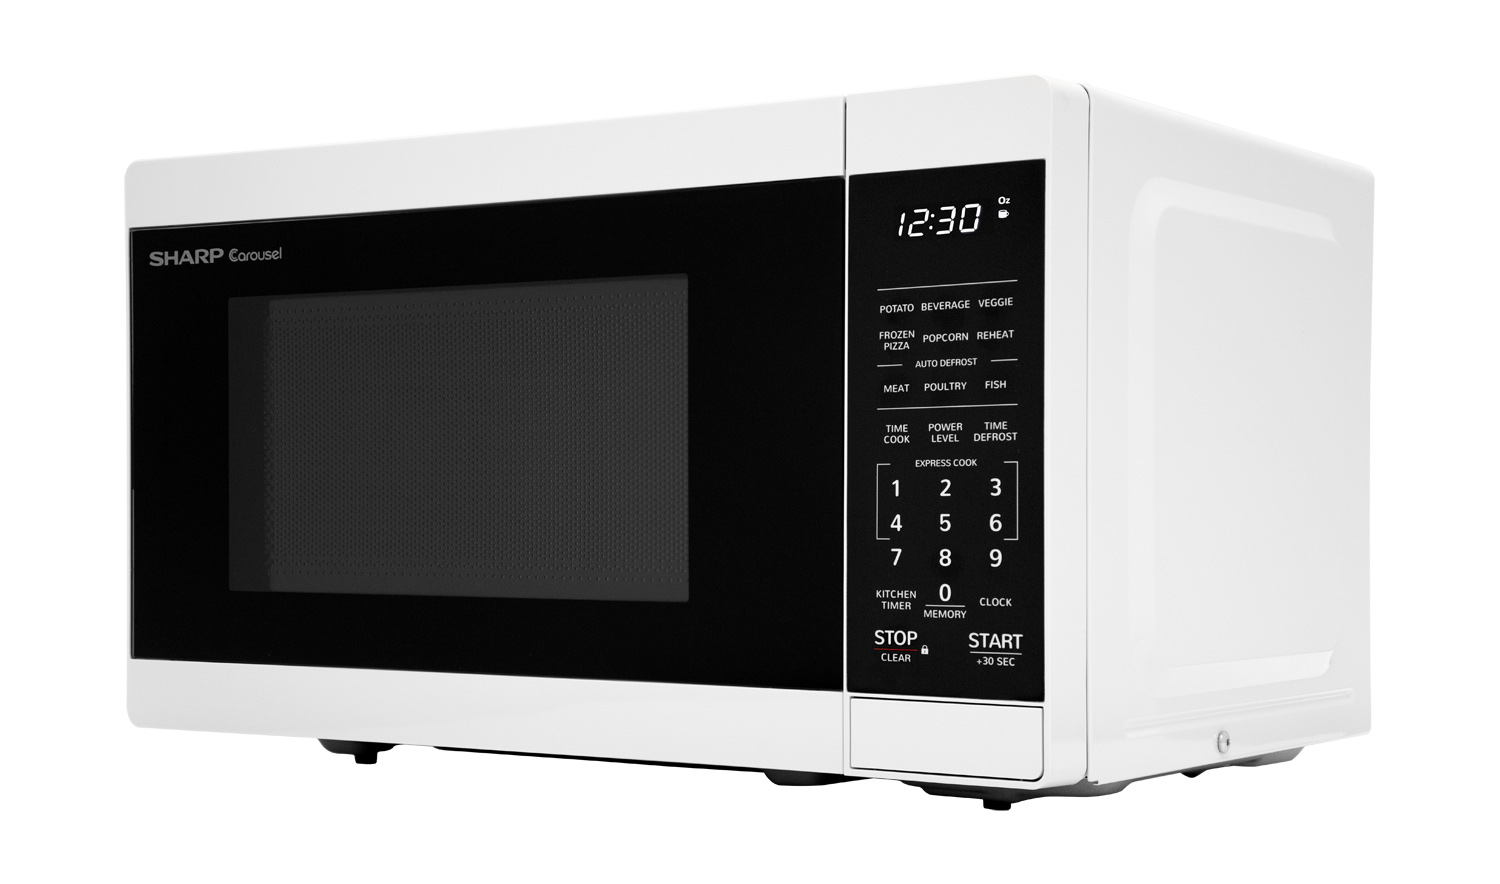 0.7 CU. FT. 700 Watt Countertop Microwave Oven, White